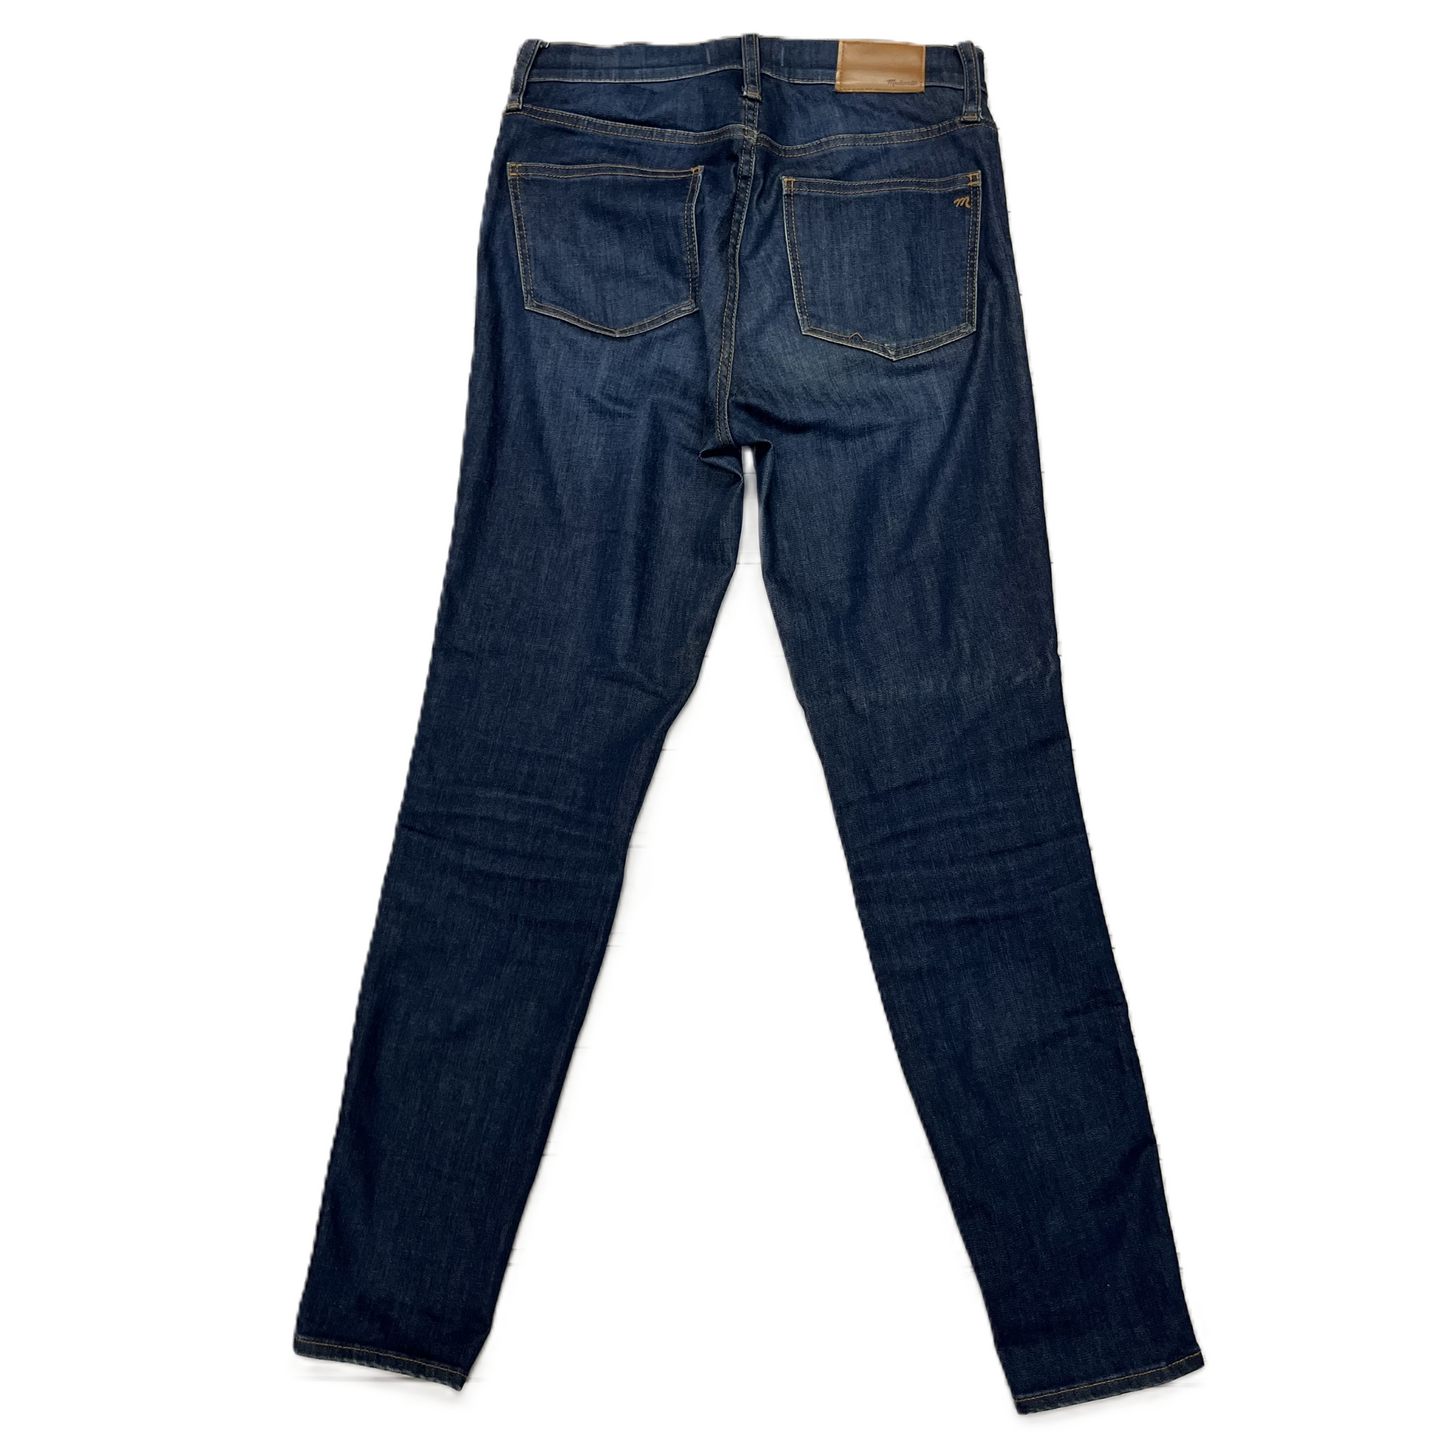 Blue Denim Jeans Skinny By Madewell, Size: 2